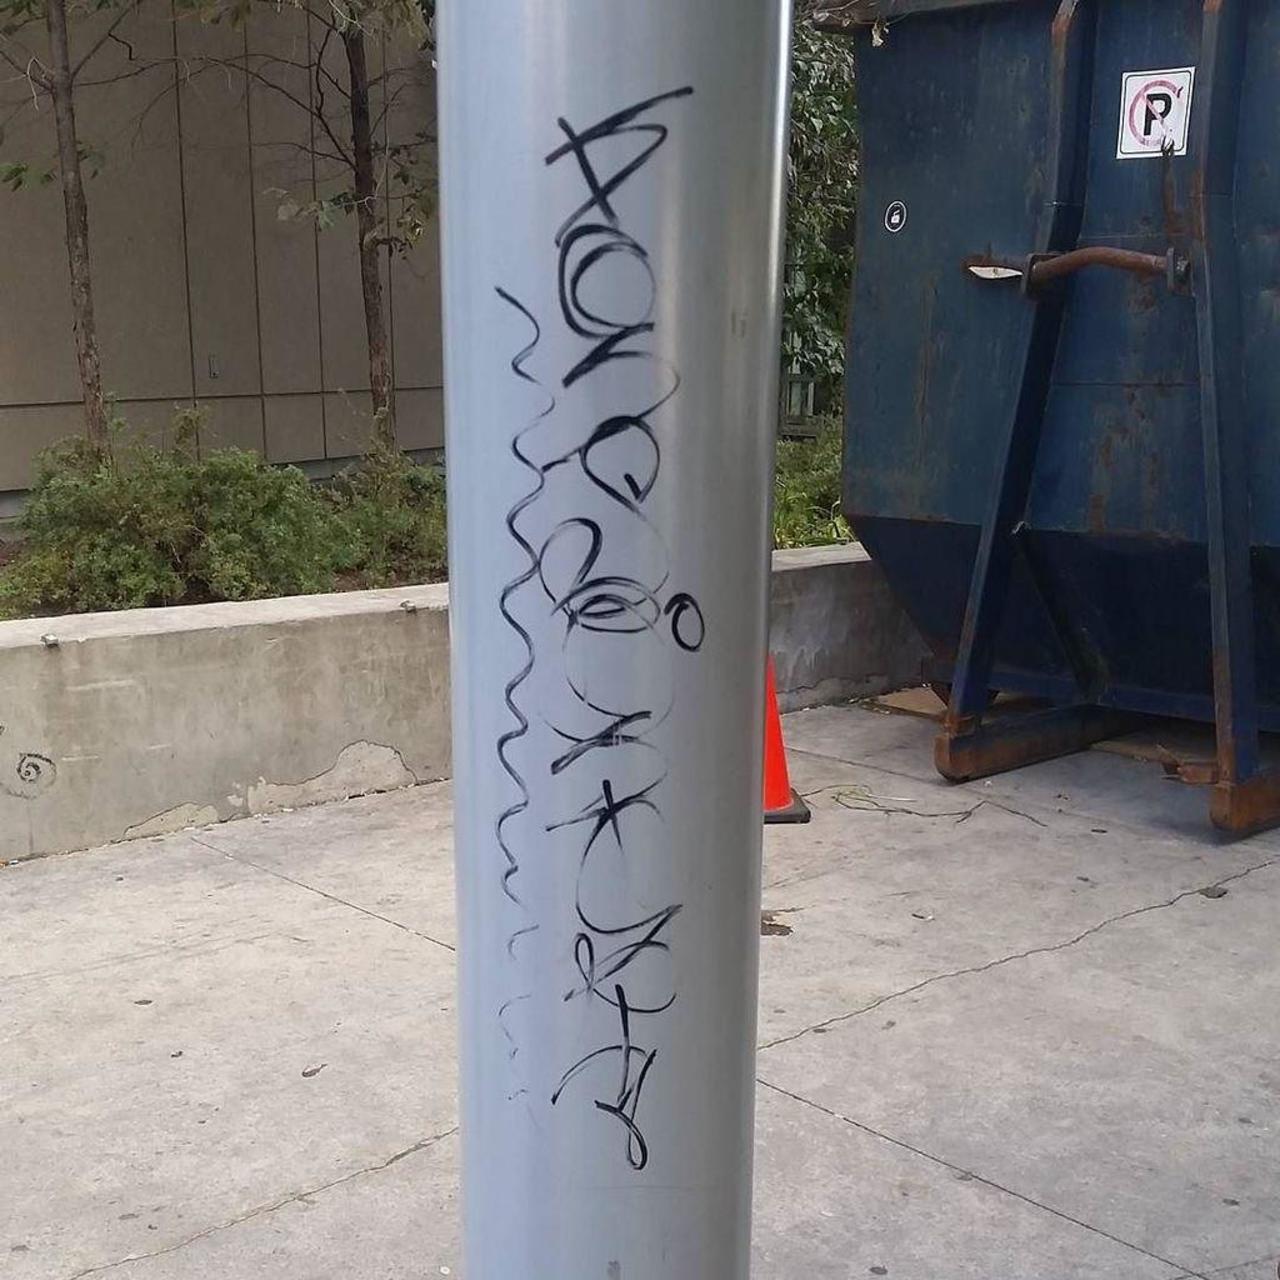 RT @artpushr: via #mildly_adventurous_bitch "http://bit.ly/1MeRp1u" #graffiti #streetart http://t.co/FWScVVAJmC